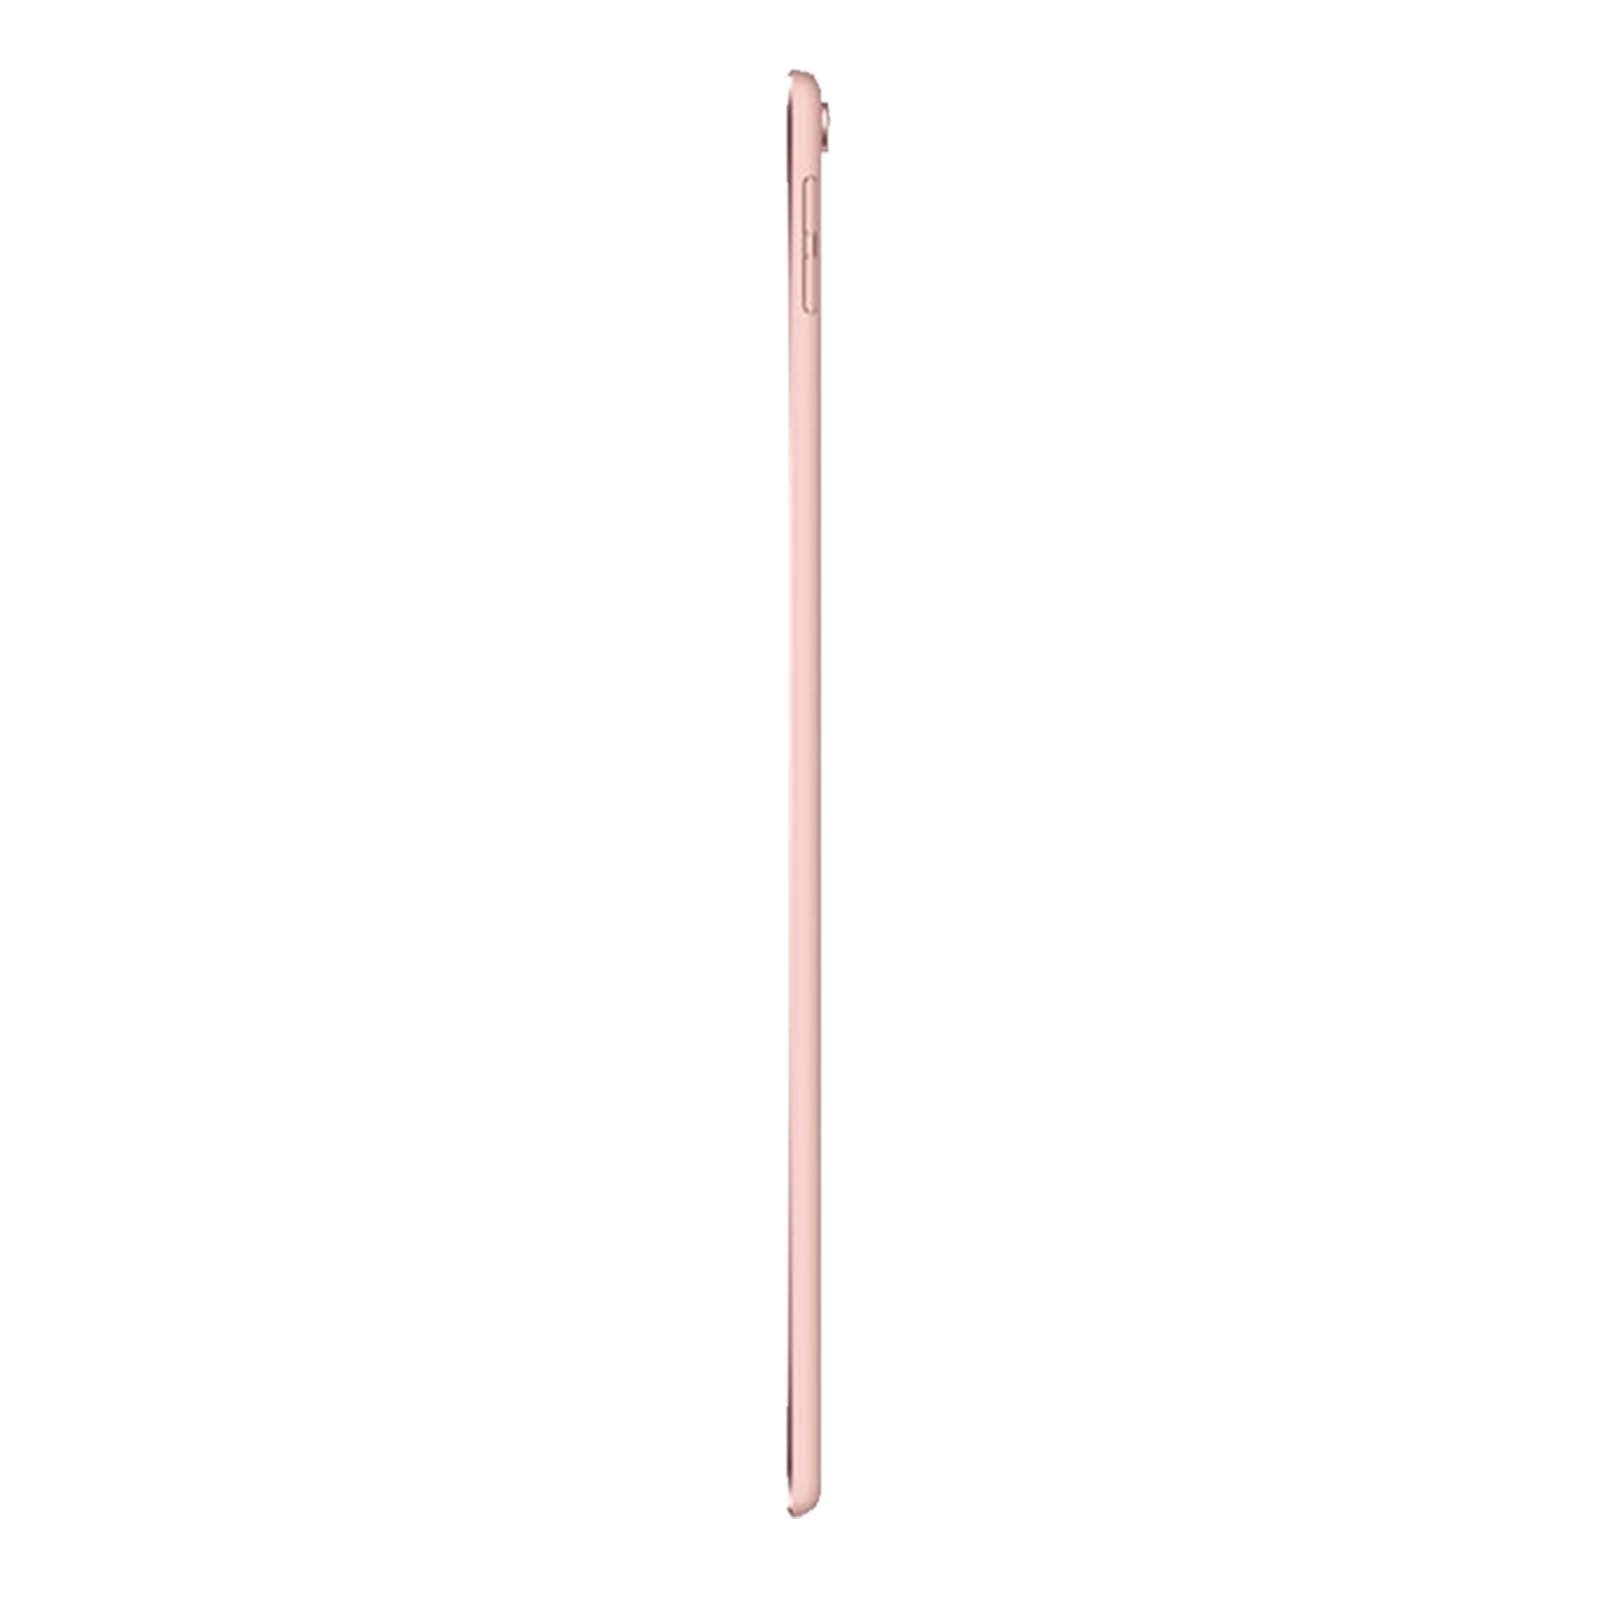 iPad Pro 10.5 Inch 512GB Rose Gold Very Good - Unlocked